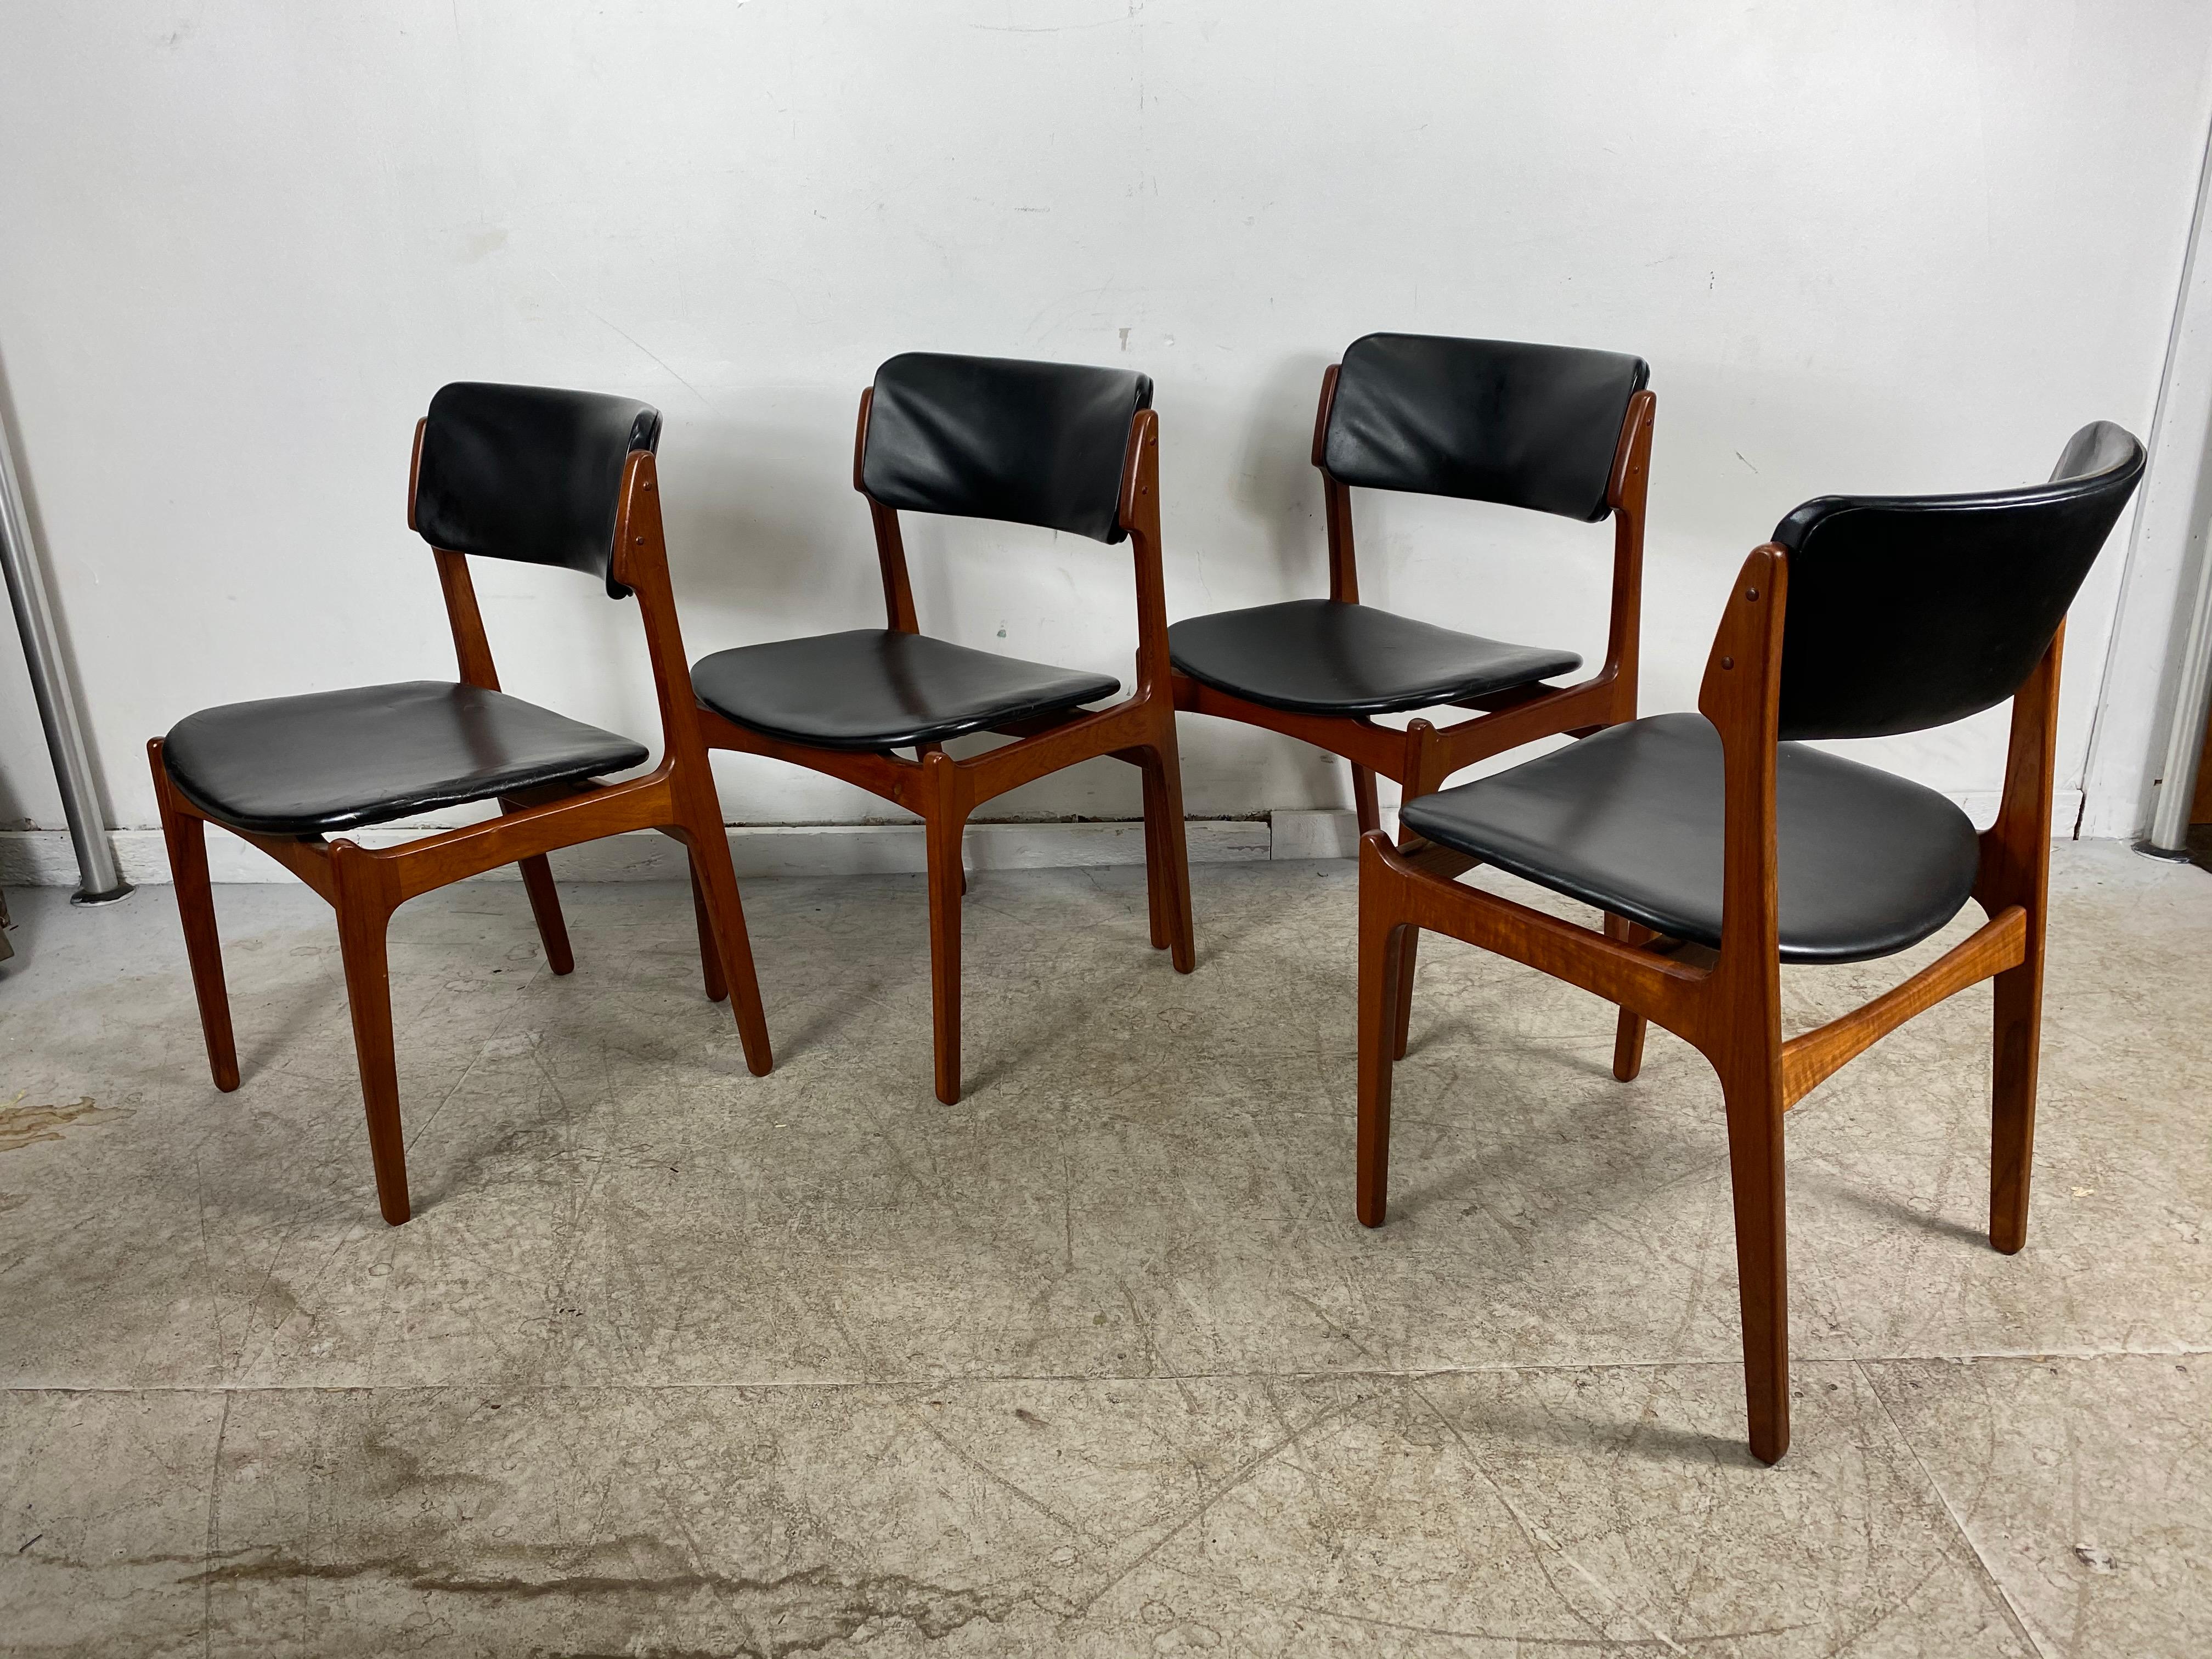 Leather Erik Buch Dining Chairs Model OD-49 by Oddense Maskinsnedkeri in Denmark For Sale